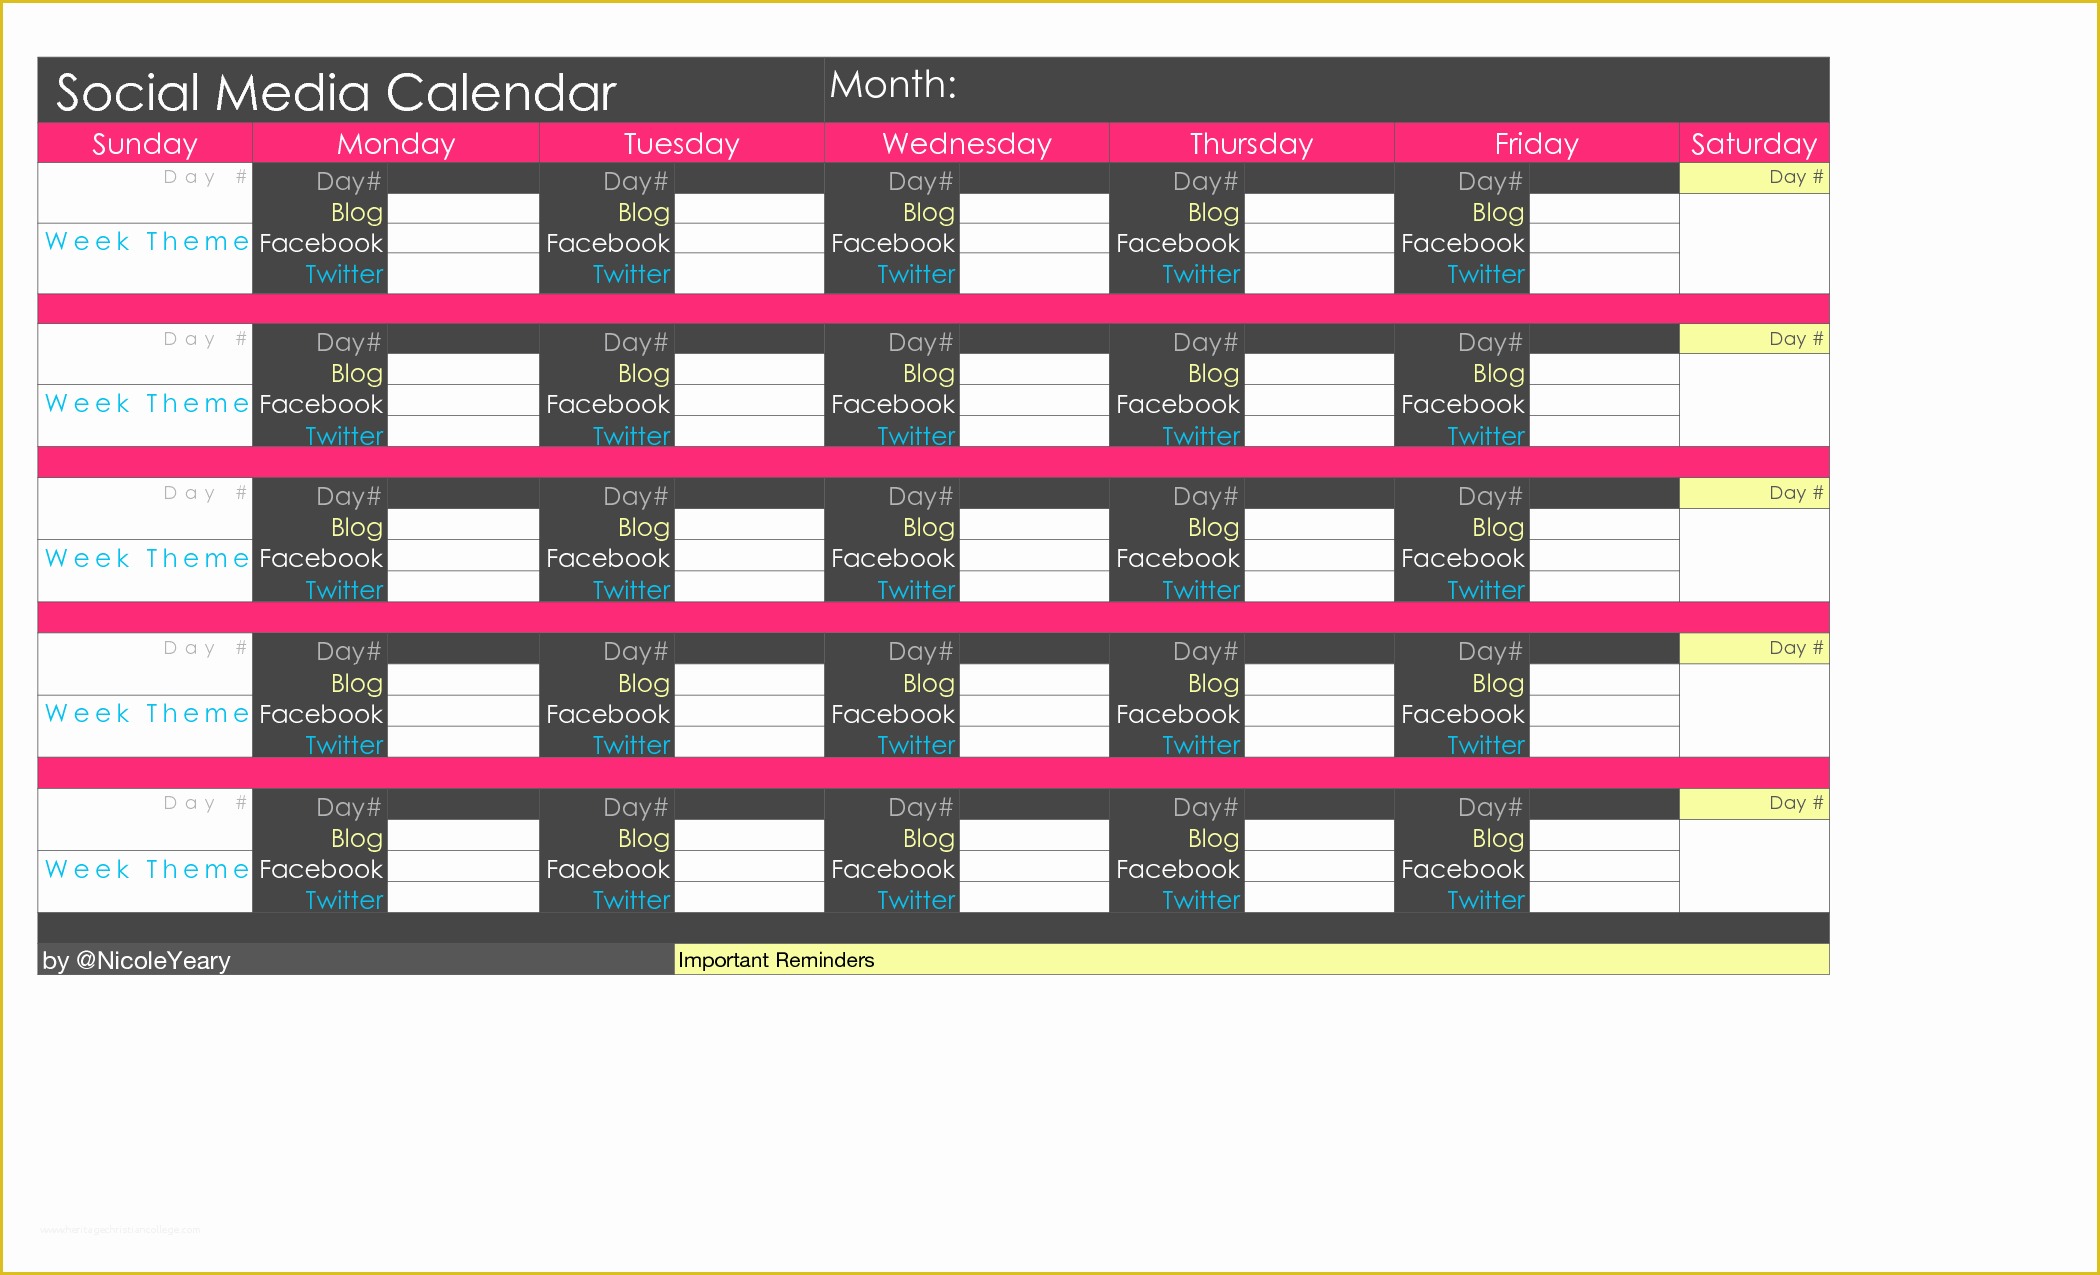 Content Calendar Template Free Of social Media Content Calendar Template